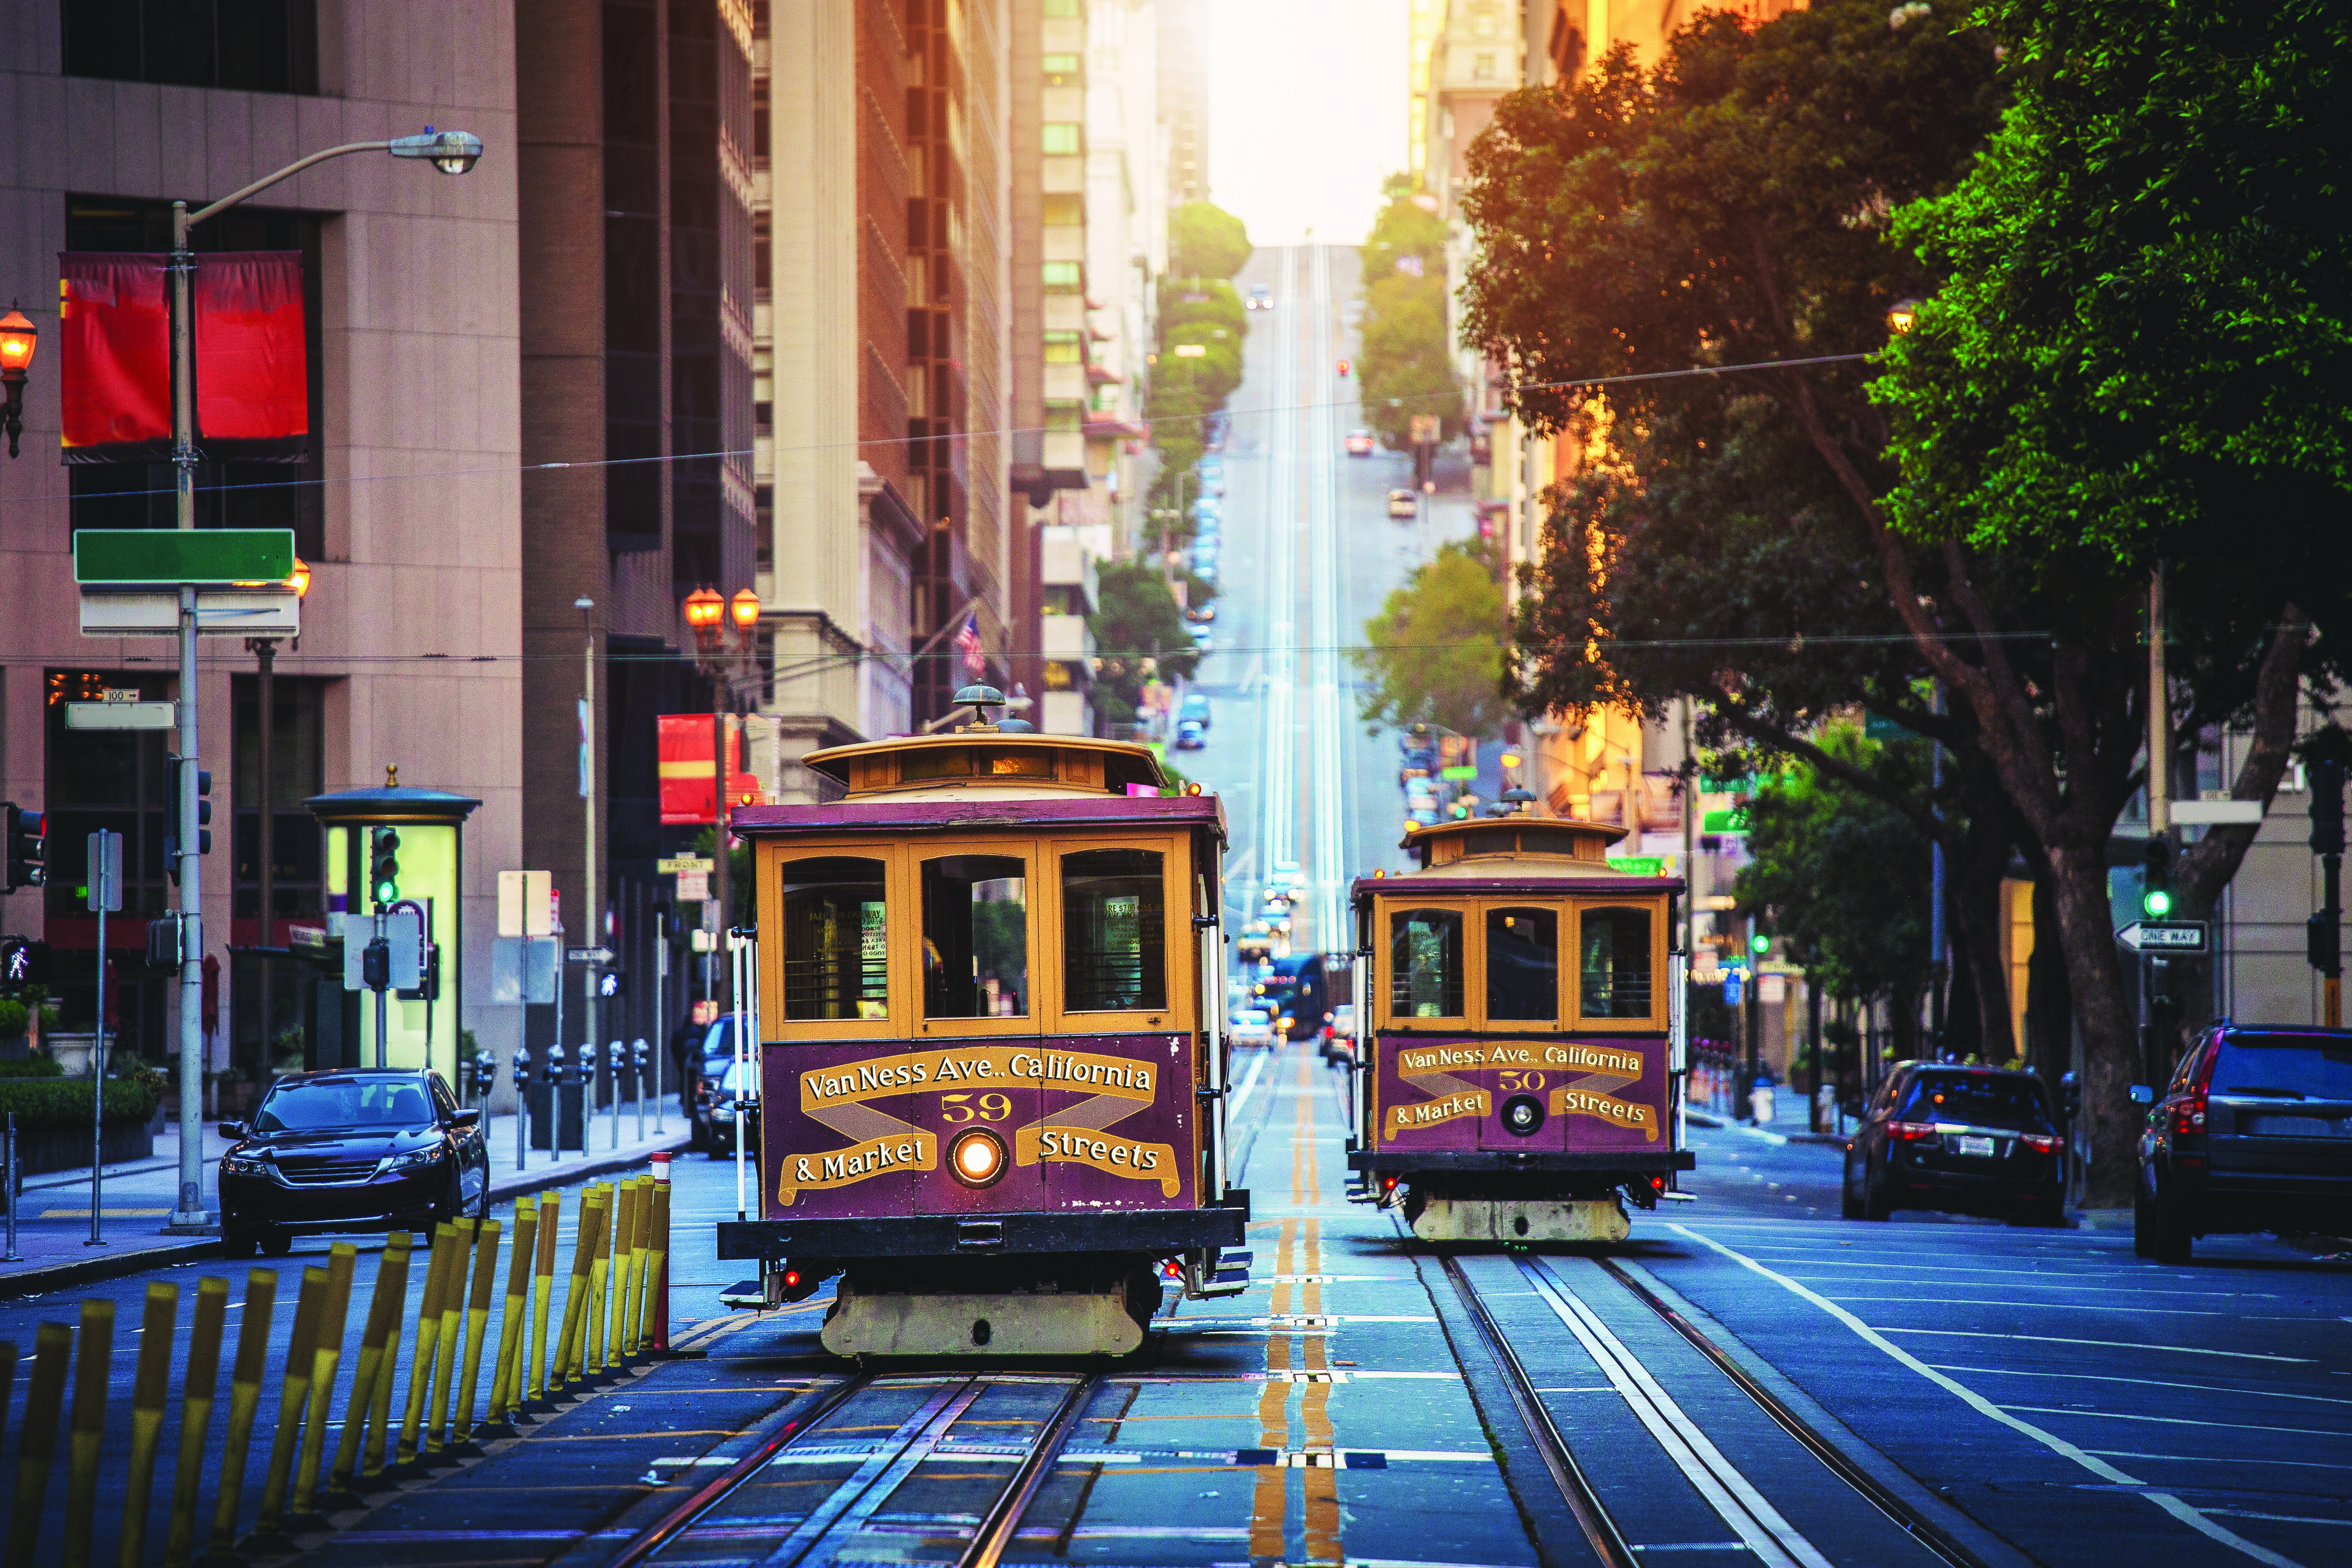 Trams in San Francisco